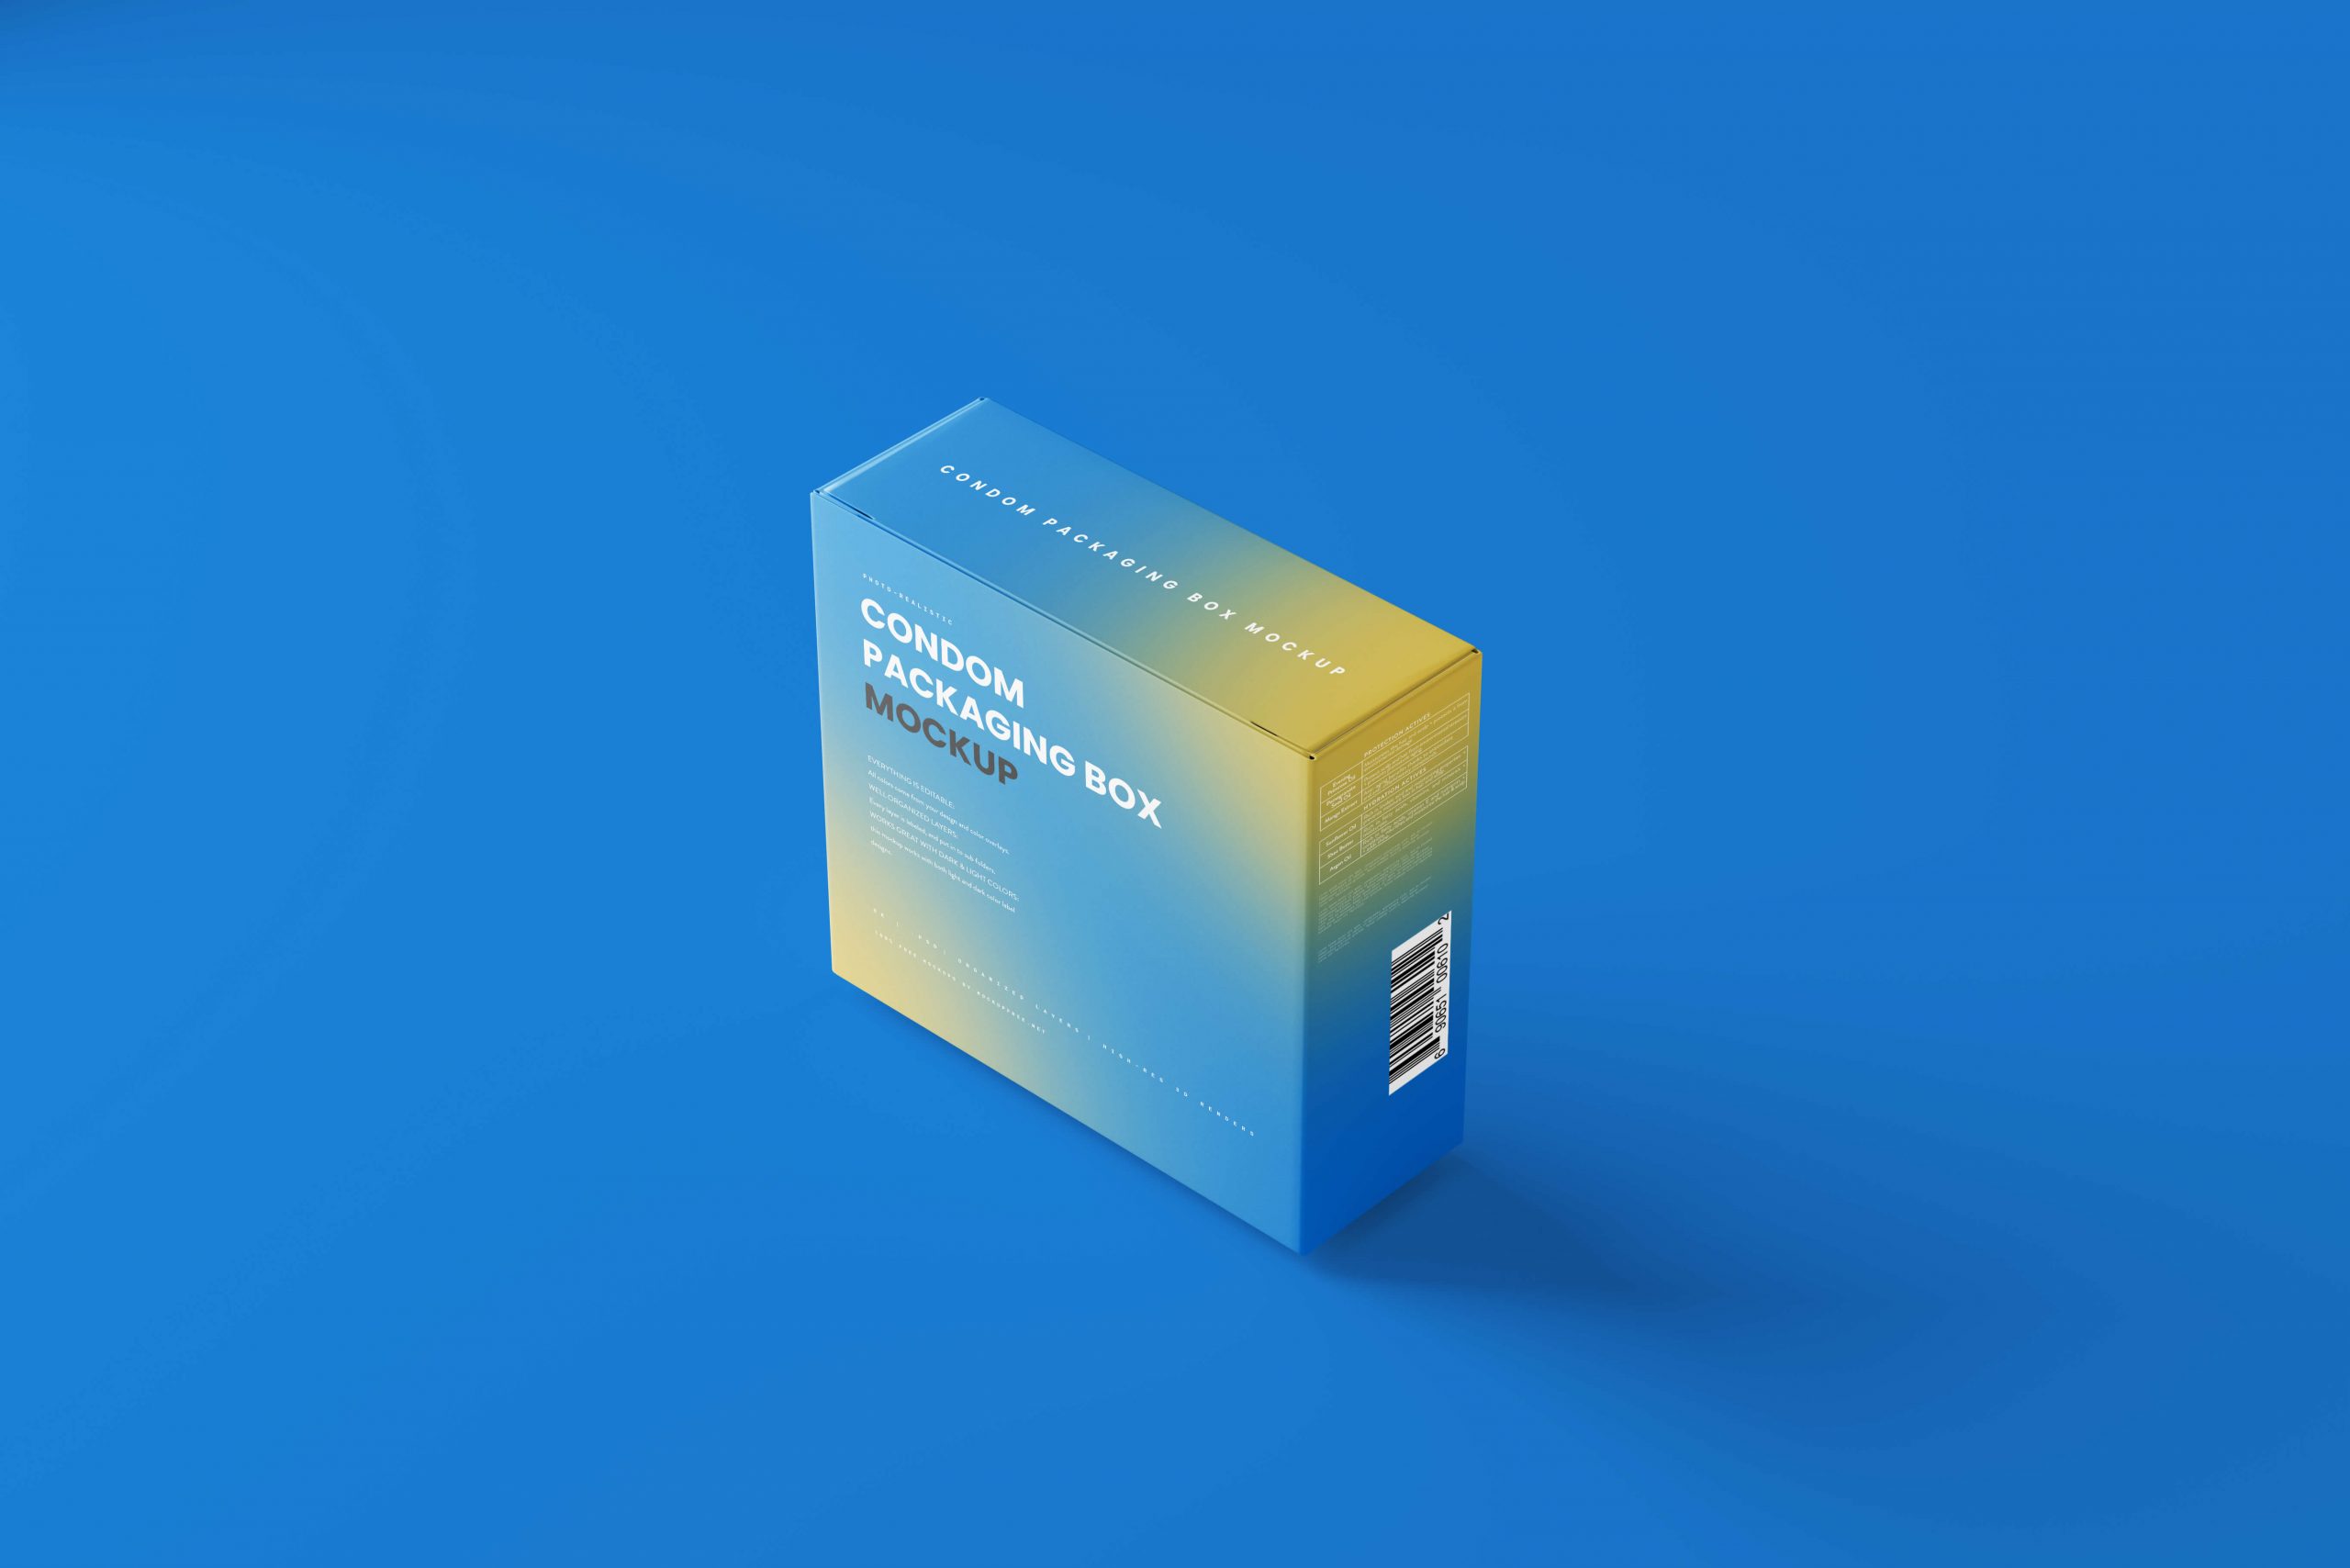 10 Free Condom Sachet Packaging Box Mockup PSD Files3